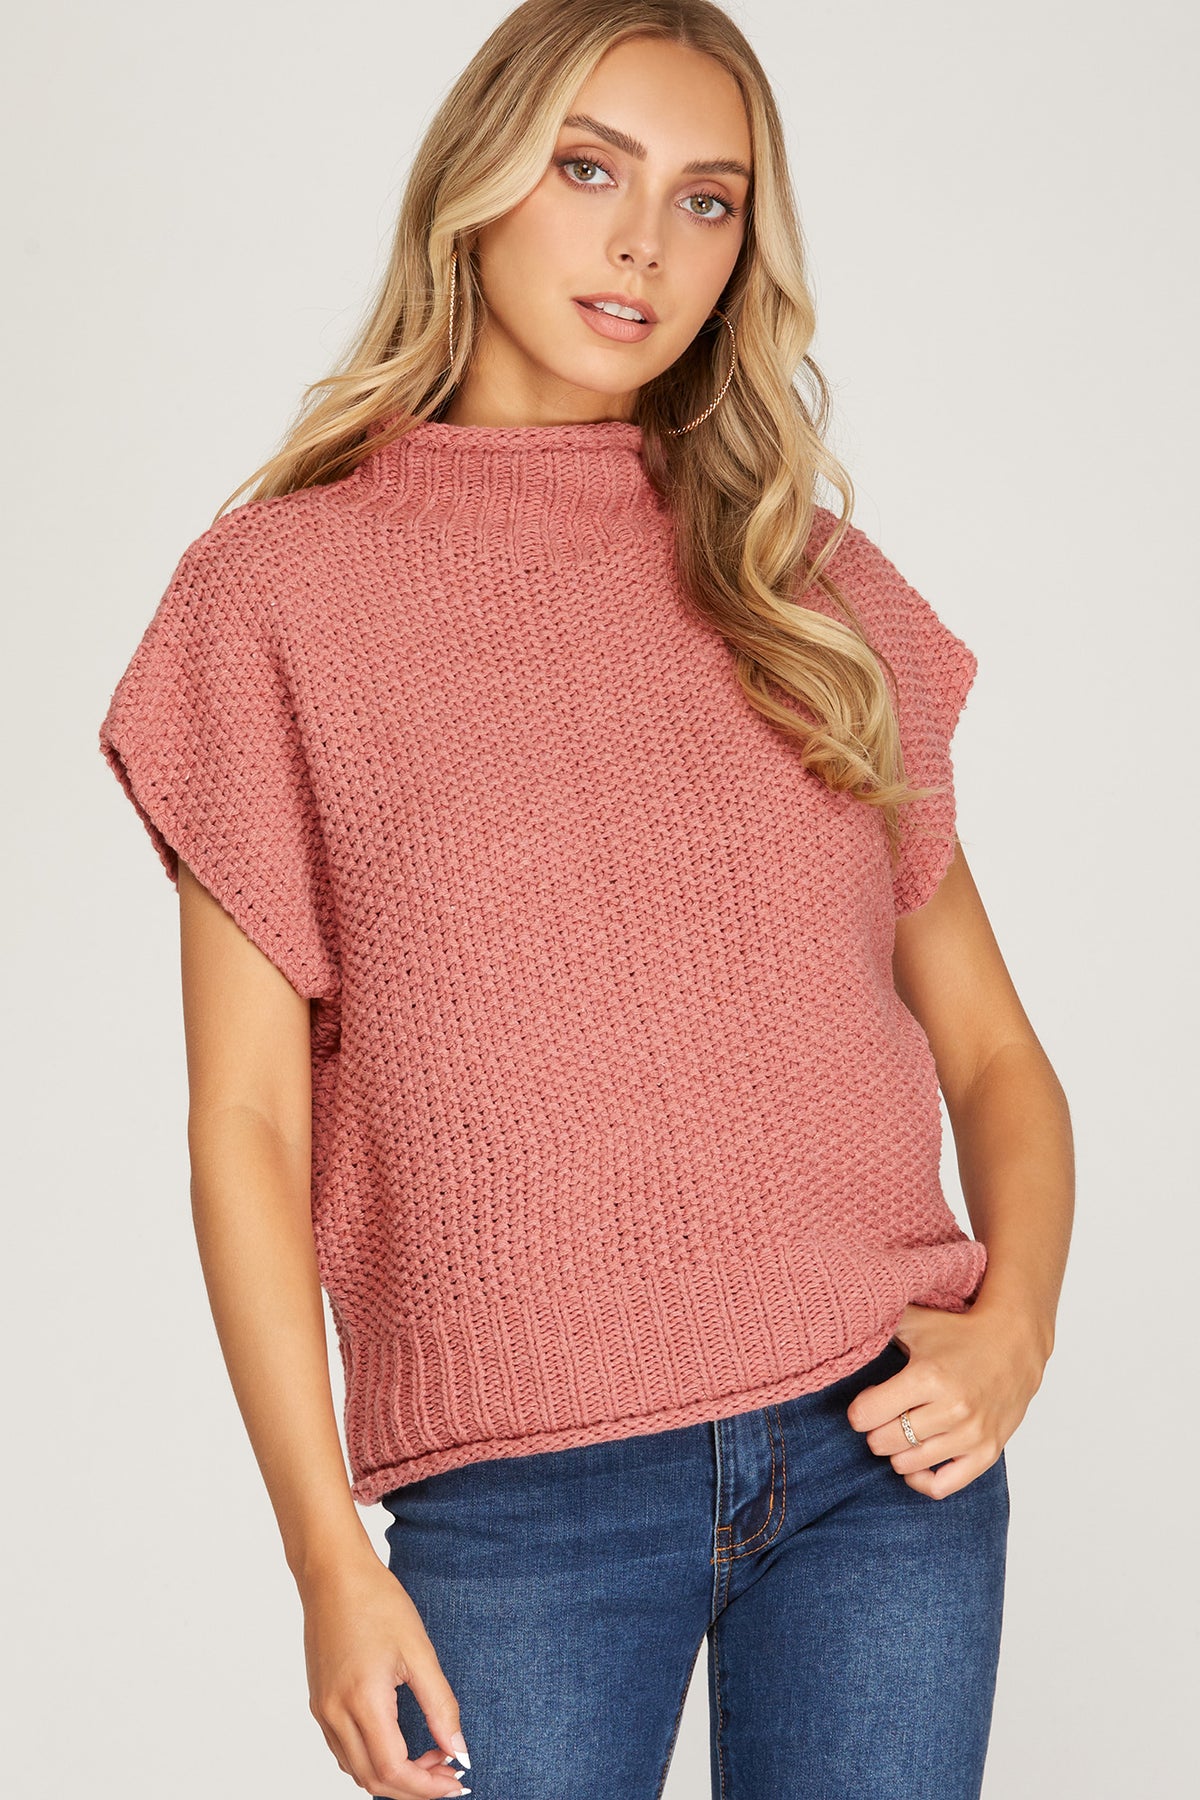 The KarLee Sweater Top